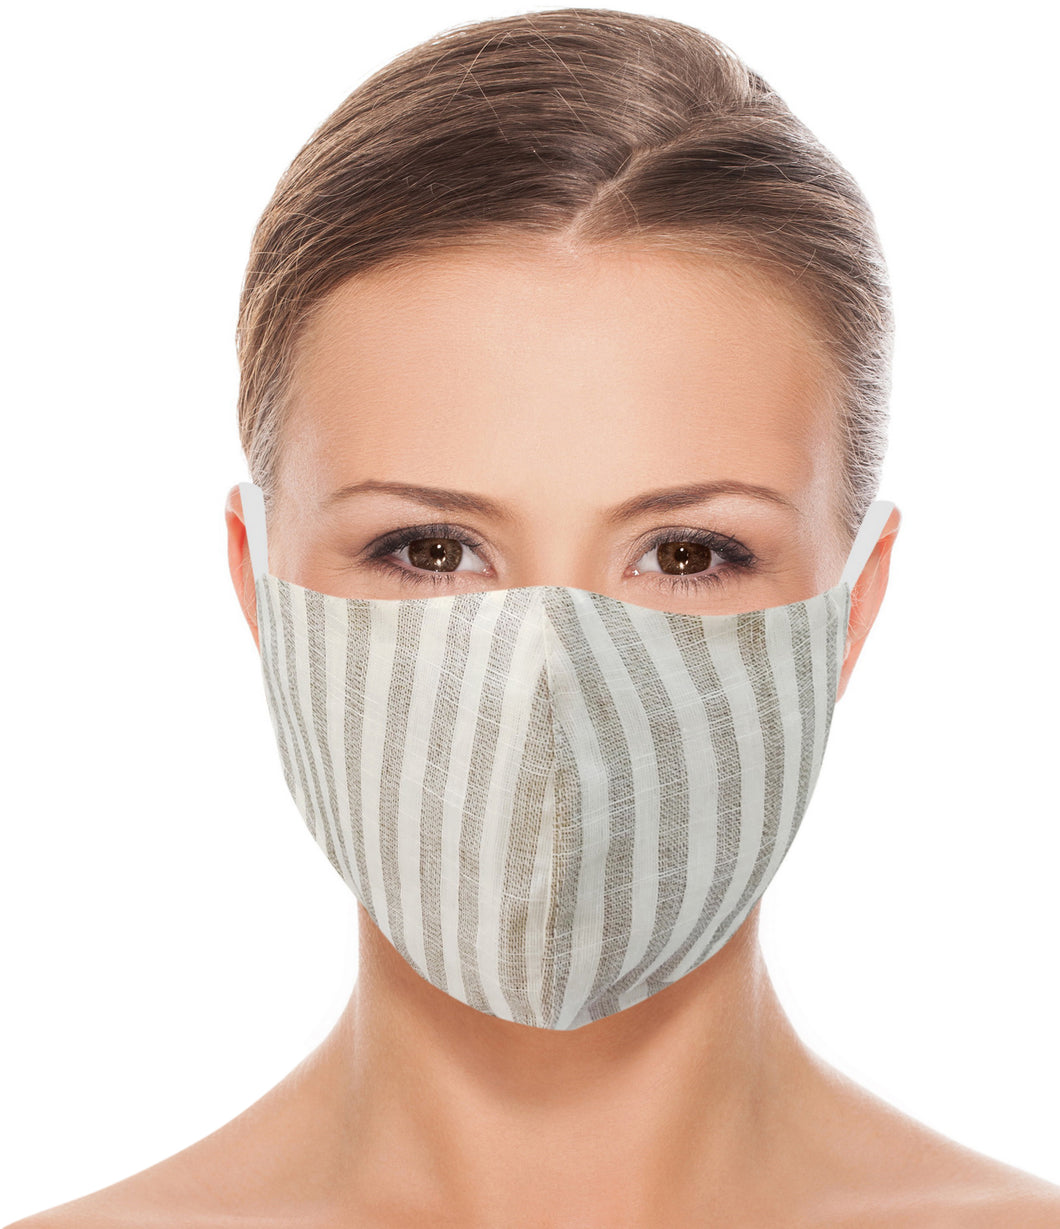 LA LEELA Stripe Print Cotton Face Faces-Masks Bandanas Balaclavas for Dust Wind Sun Protection Outdoors Festivals Sports Grey_V894